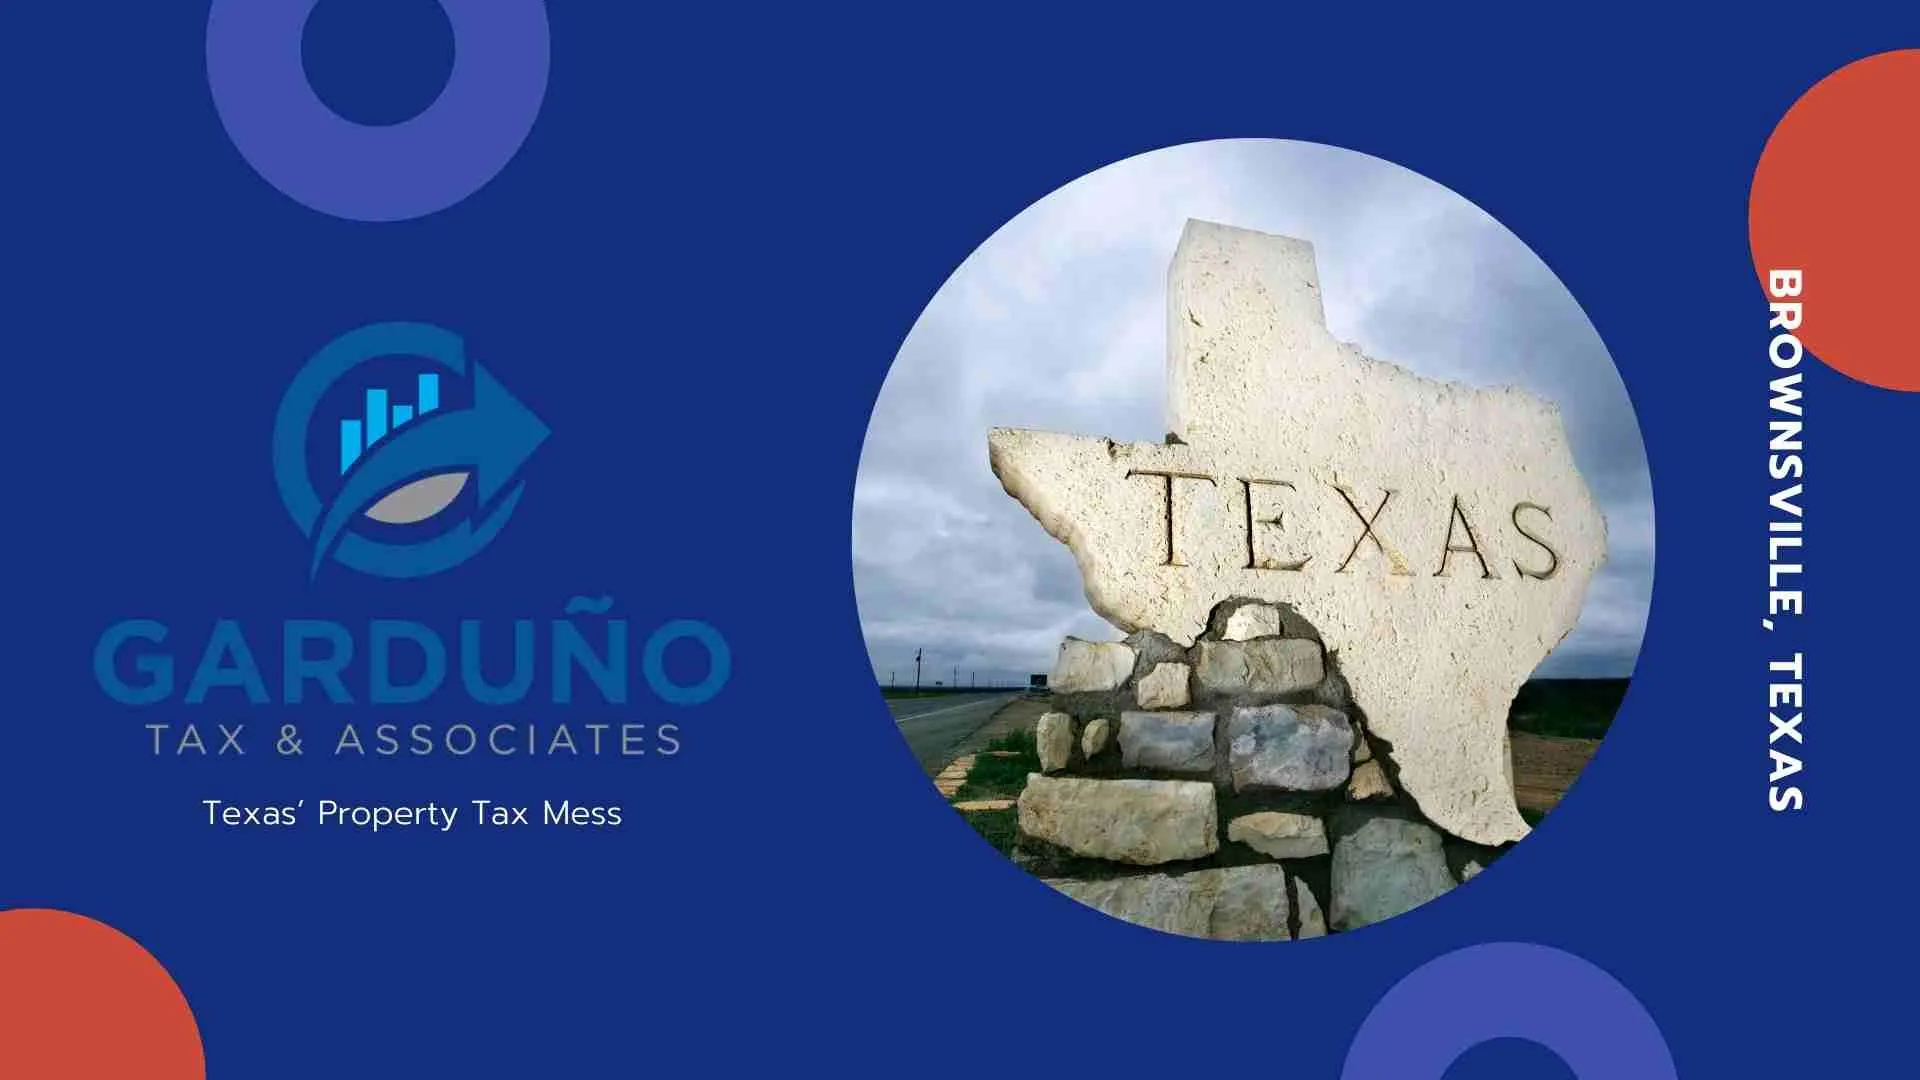 Texas’ Property Tax Mess